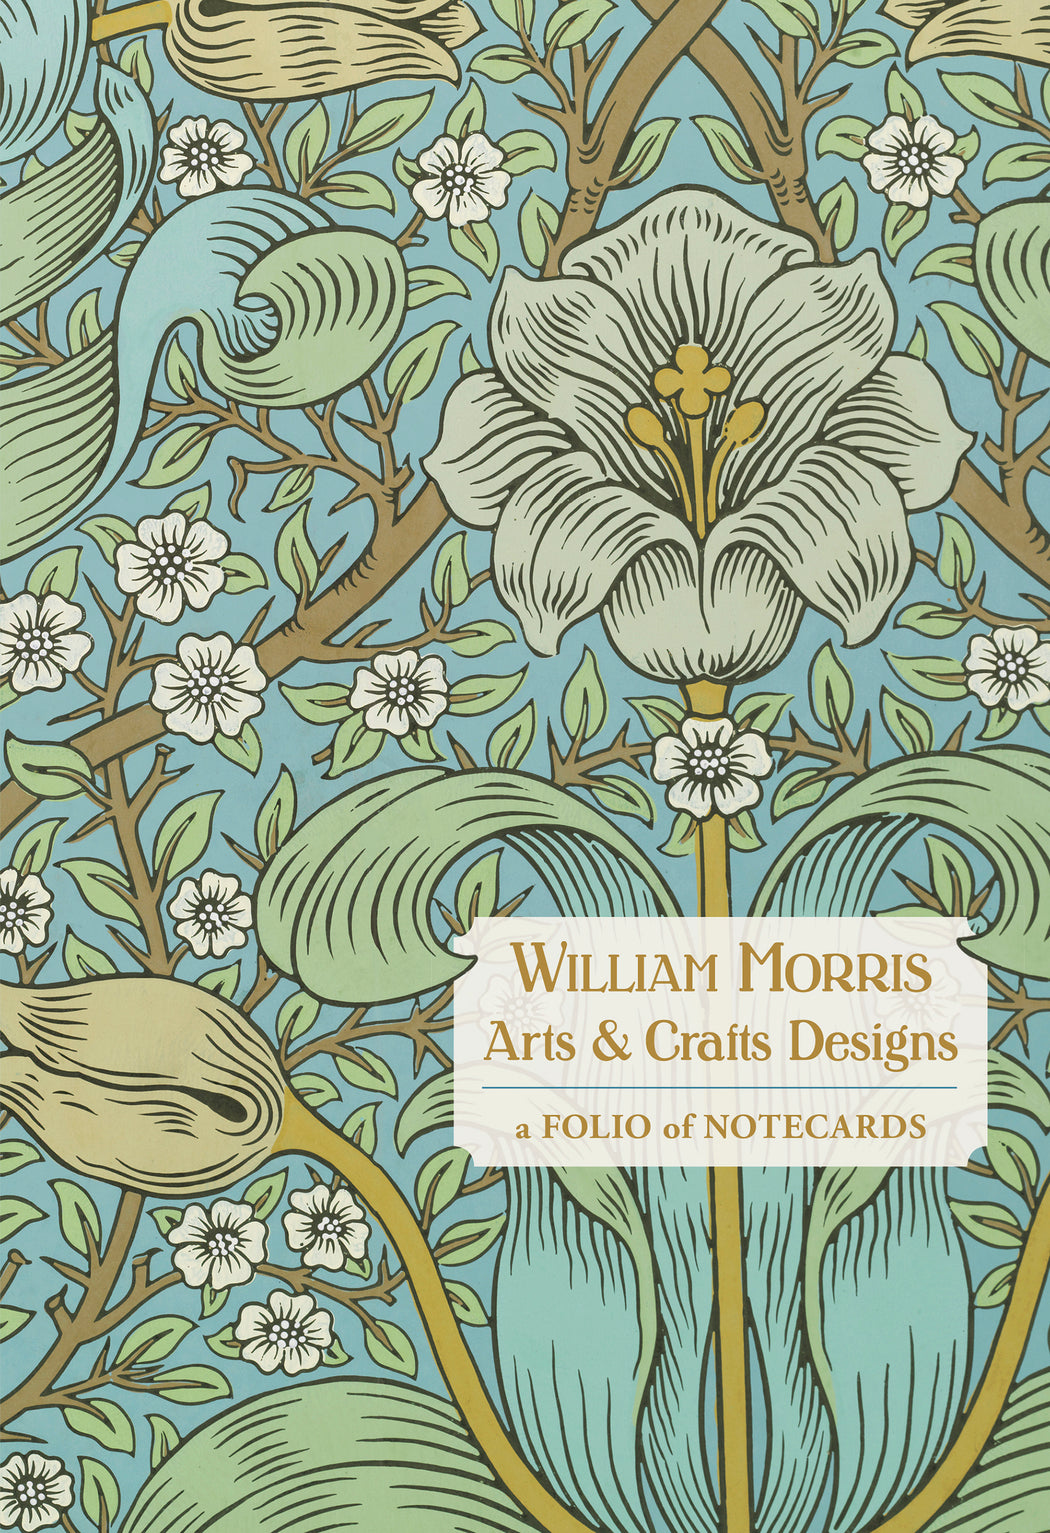 Biography of William Morris - Art Nouveau